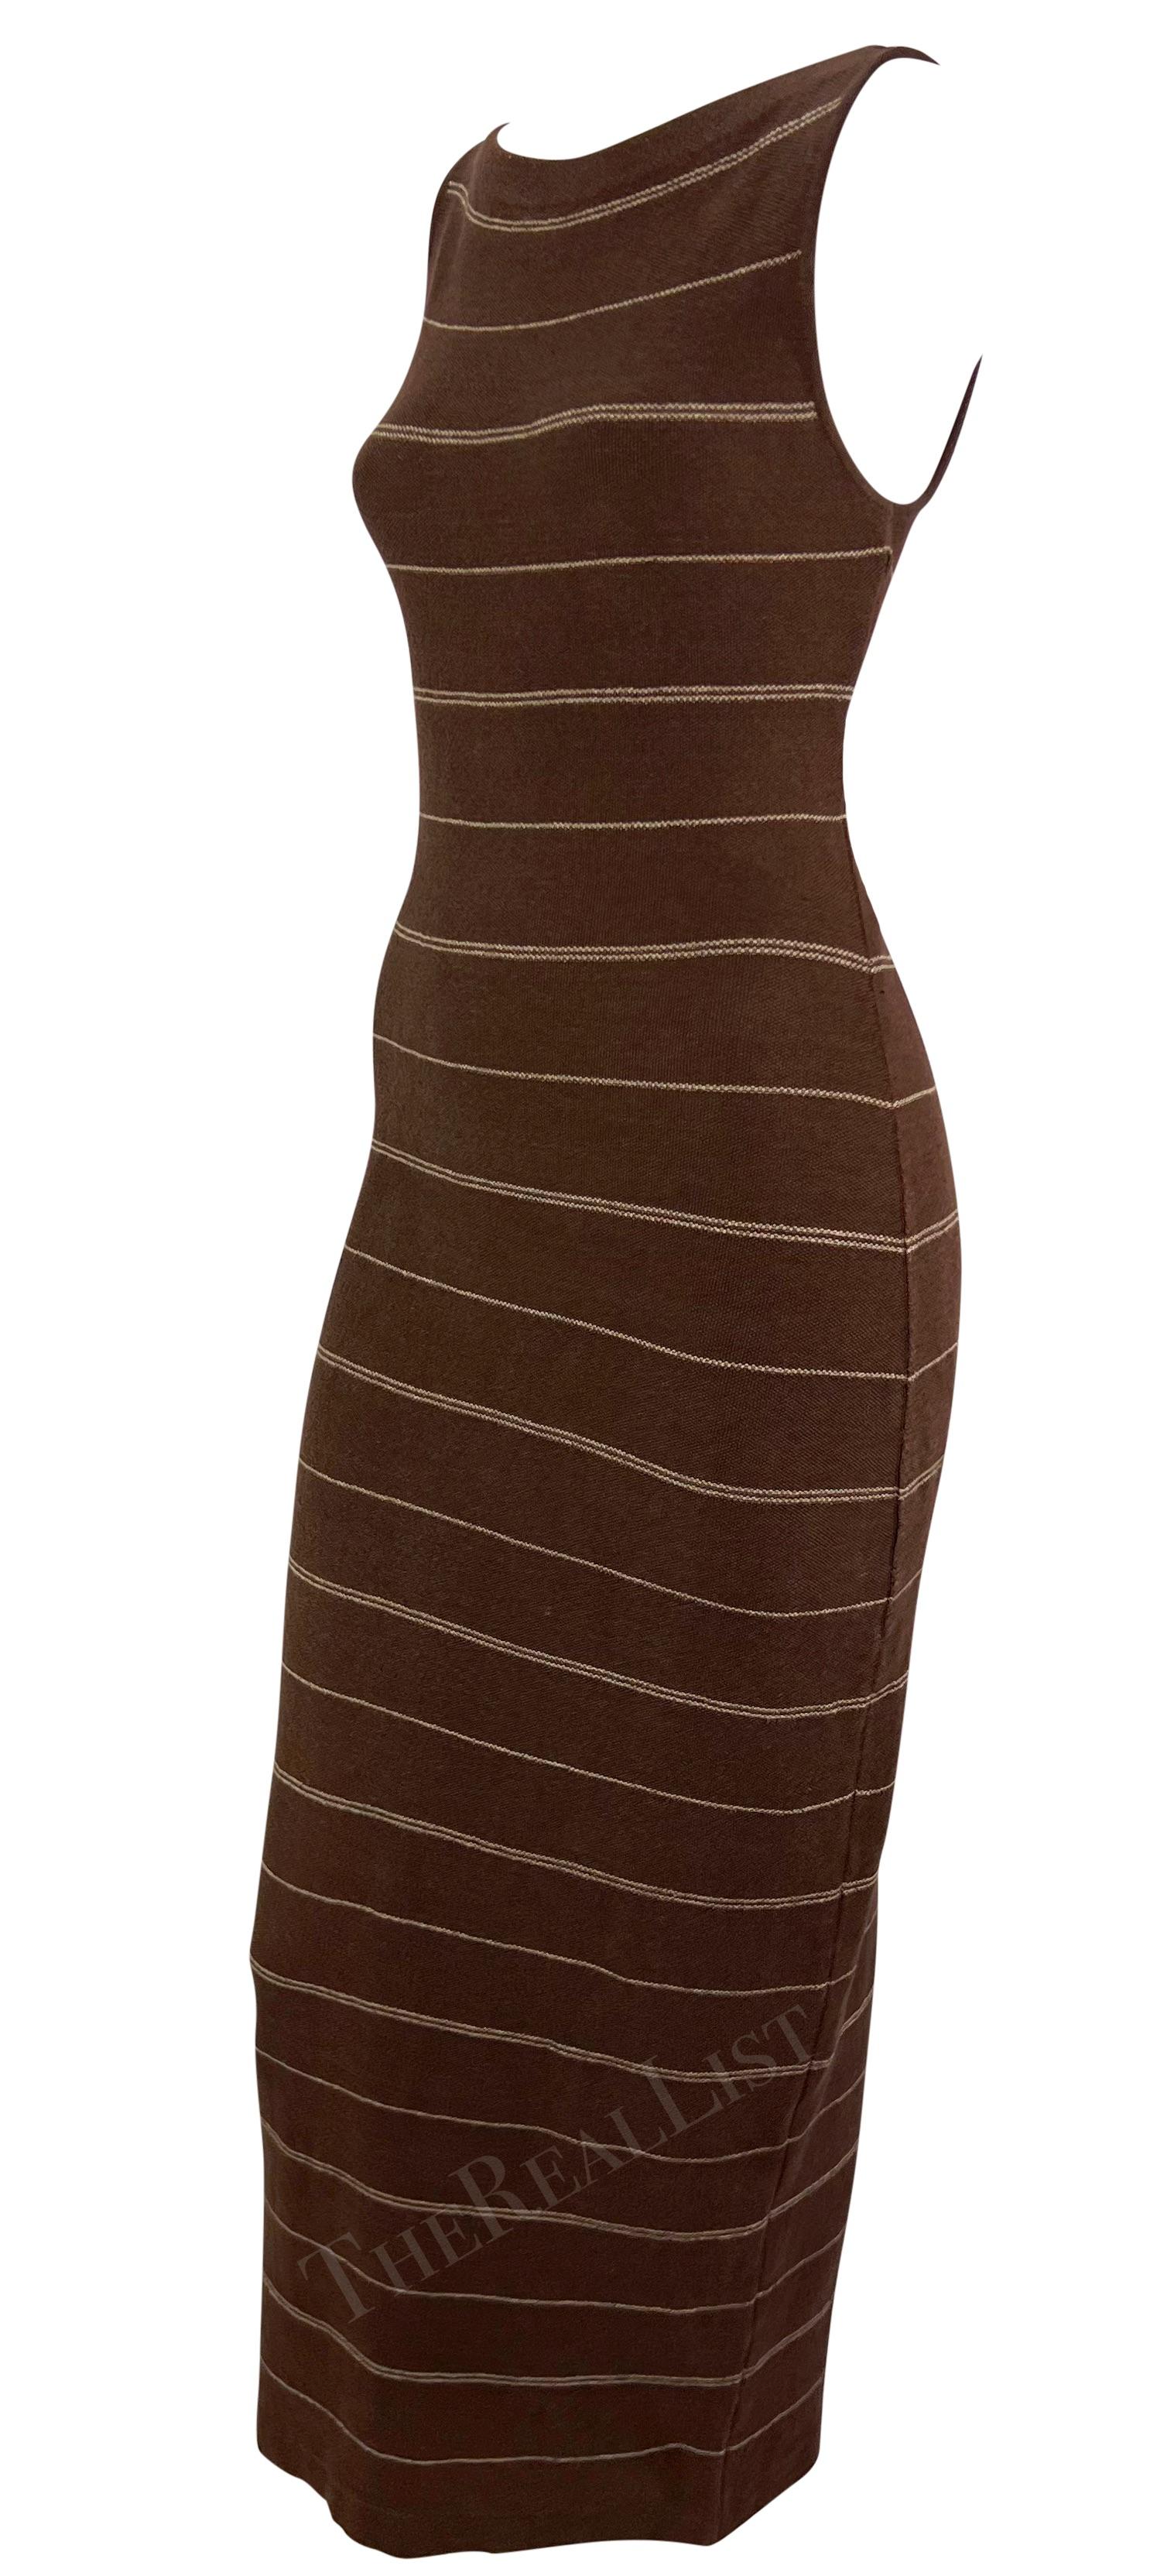 S/S 1997 Ralph Lauren Runway Stretch Knit Backless Brown Stripe Midi Dress For Sale 7